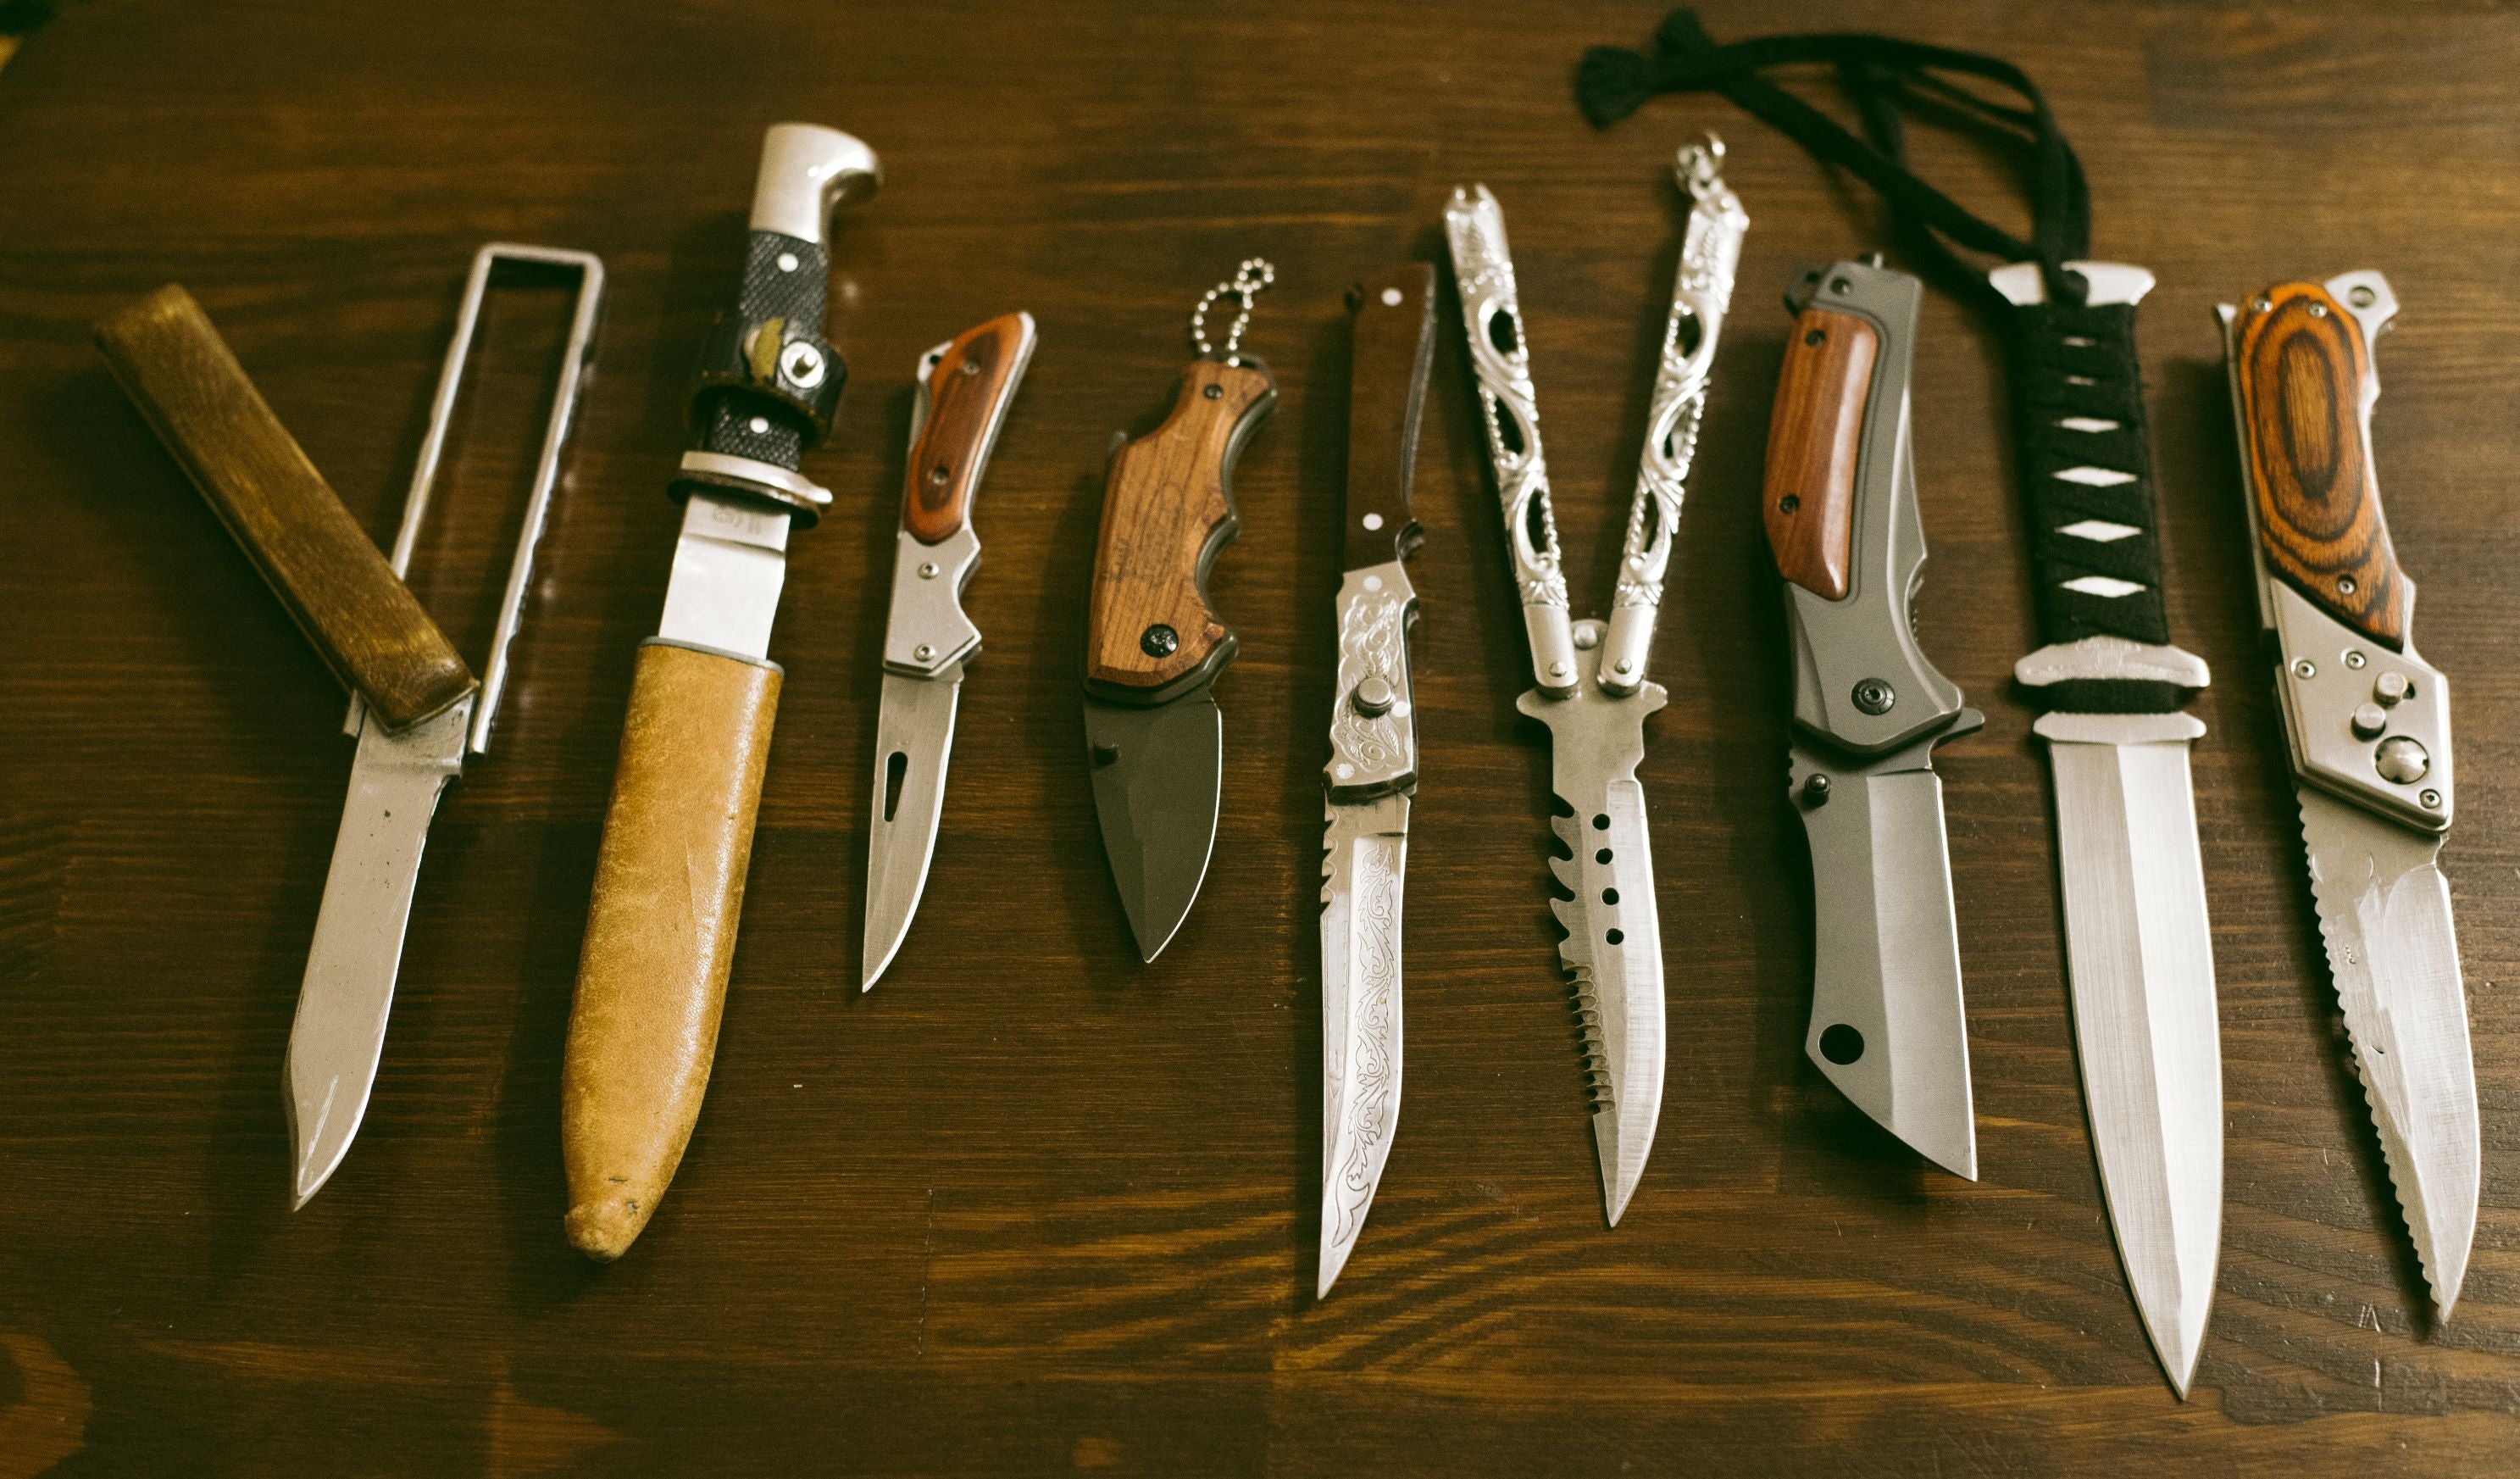 Stone storage ideas – Wicked Edge Precision Knife Sharpener